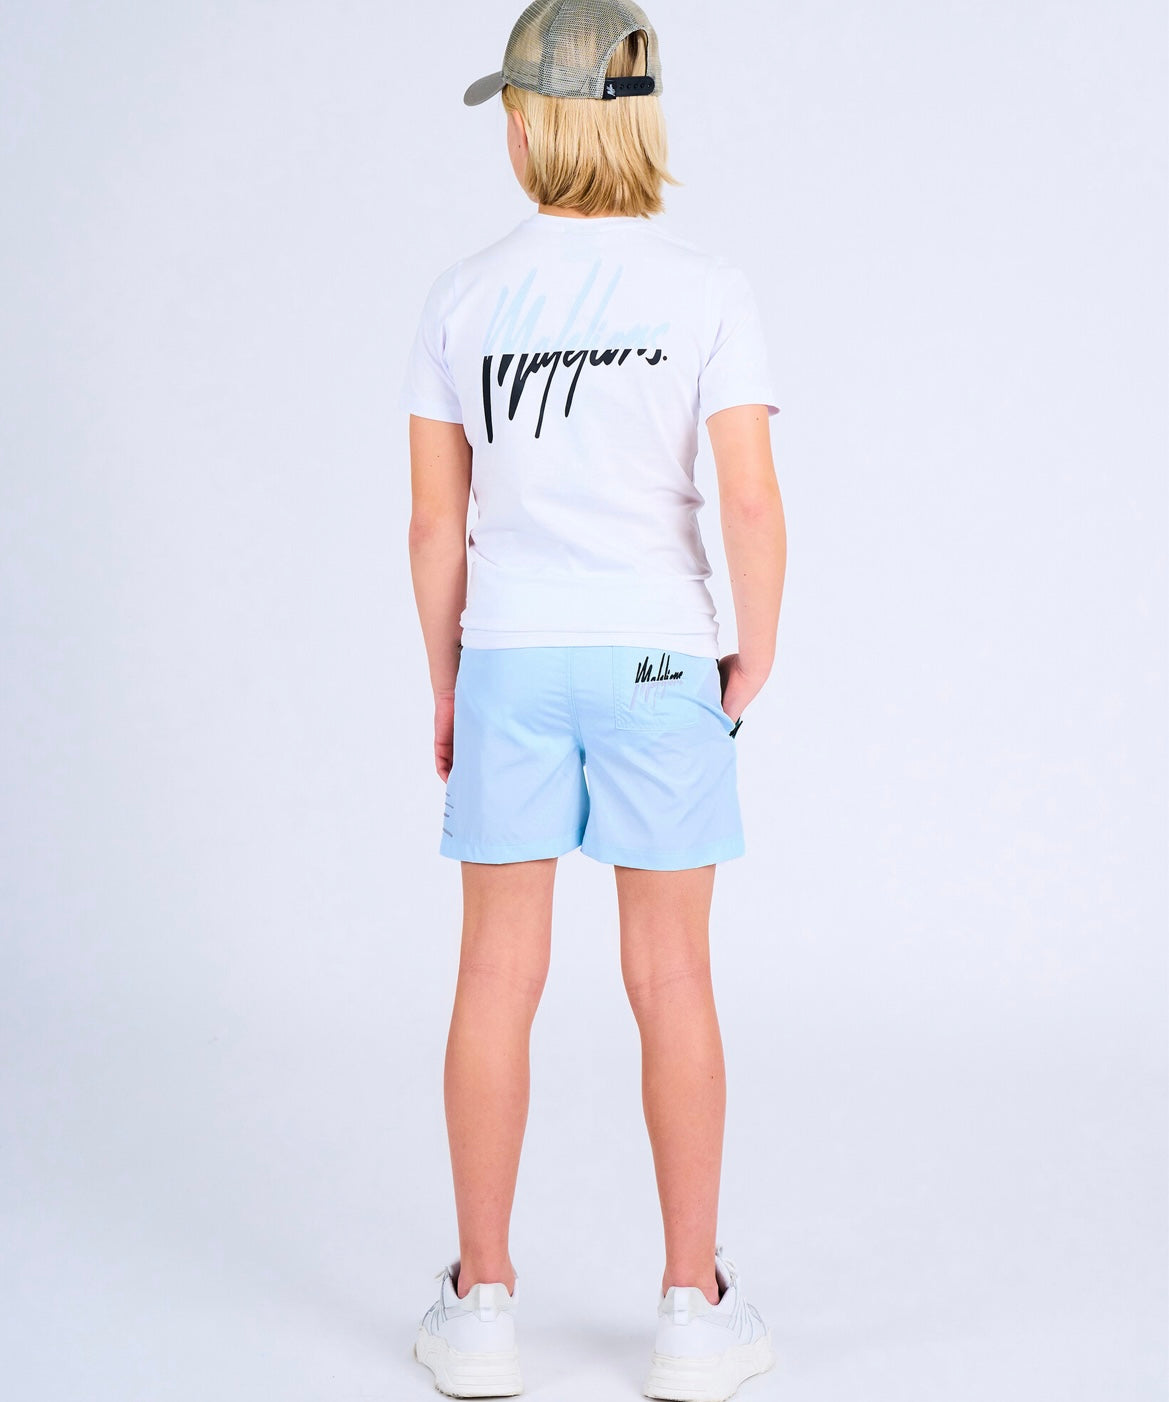 Malelions junior split t-shirt - white/blue